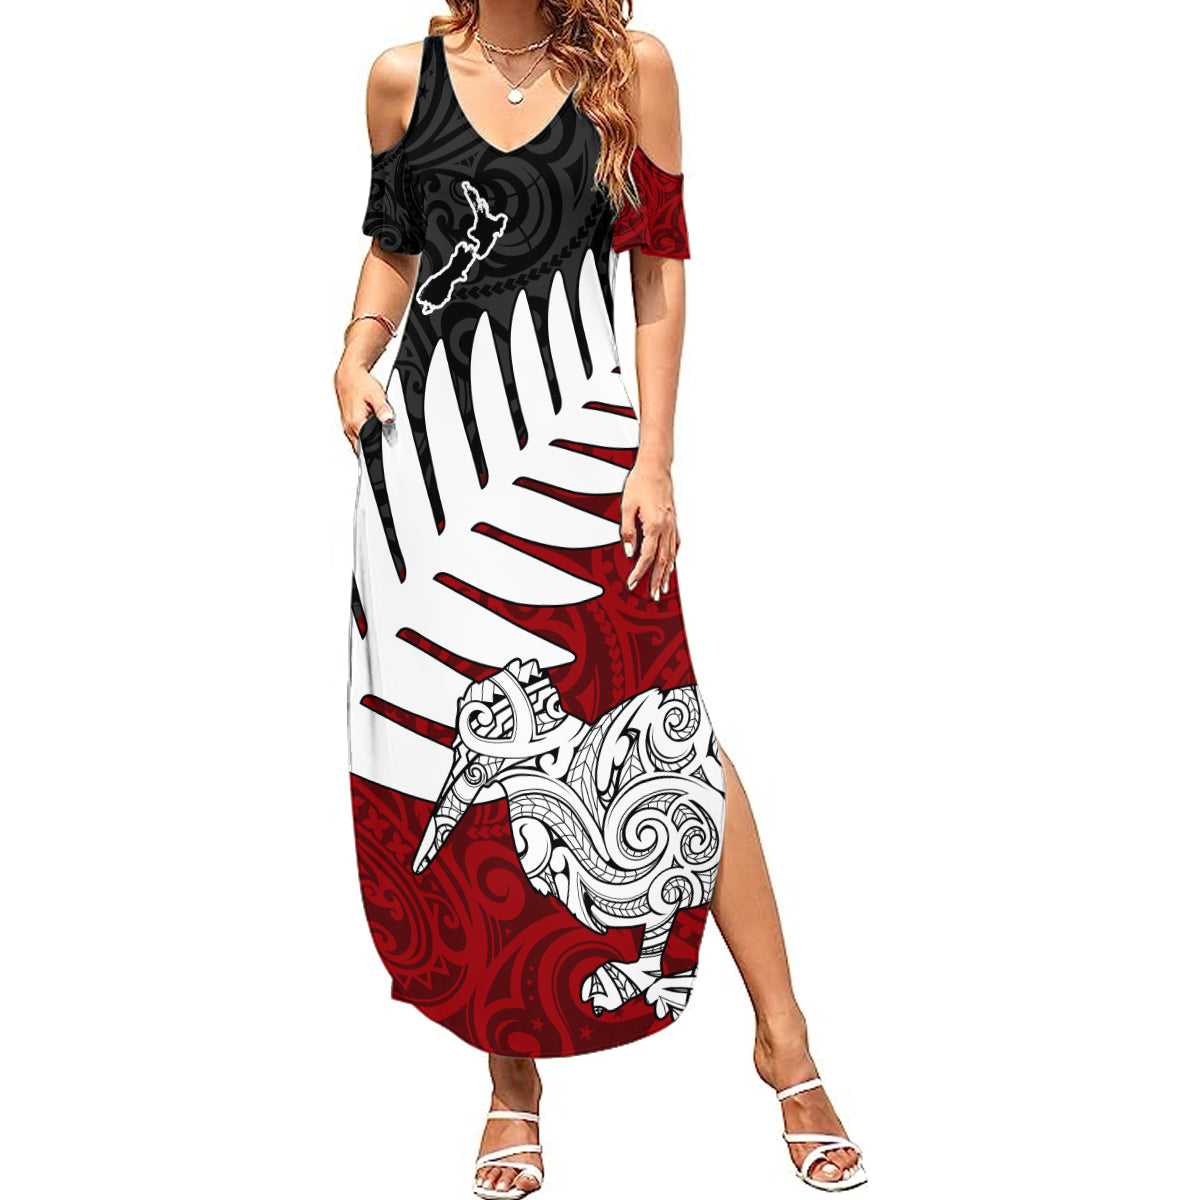 Aotearoa New Zealand Summer Maxi Dress Silver Fern Kiwi Bird and NZ Map with Maori Tribal Red Style LT03 Women Pink - Polynesian Pride